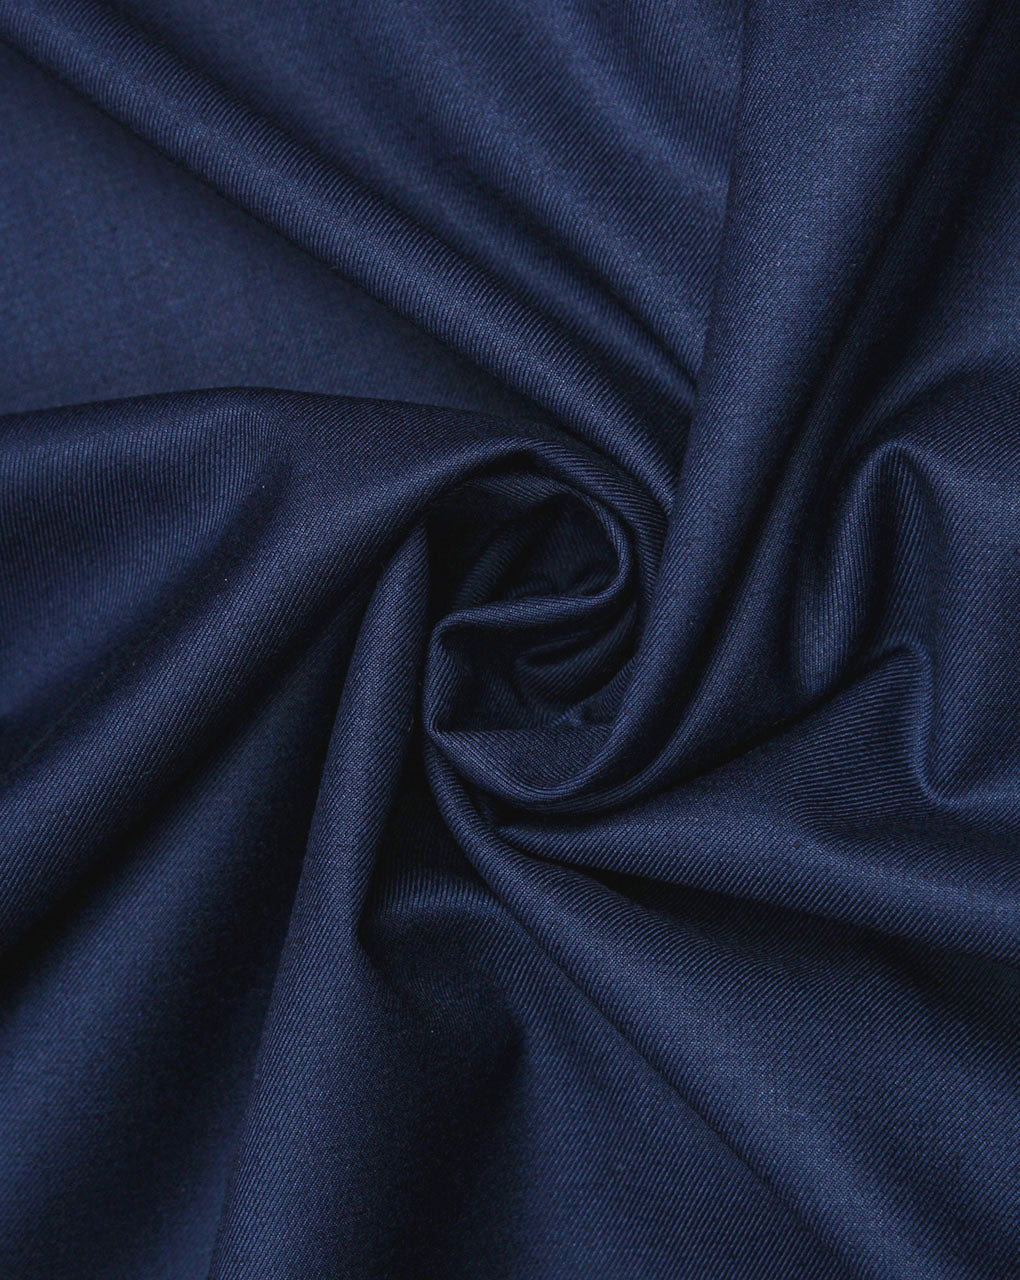 Navy Blue Plain Design 2 Woolen Suiting Fabric